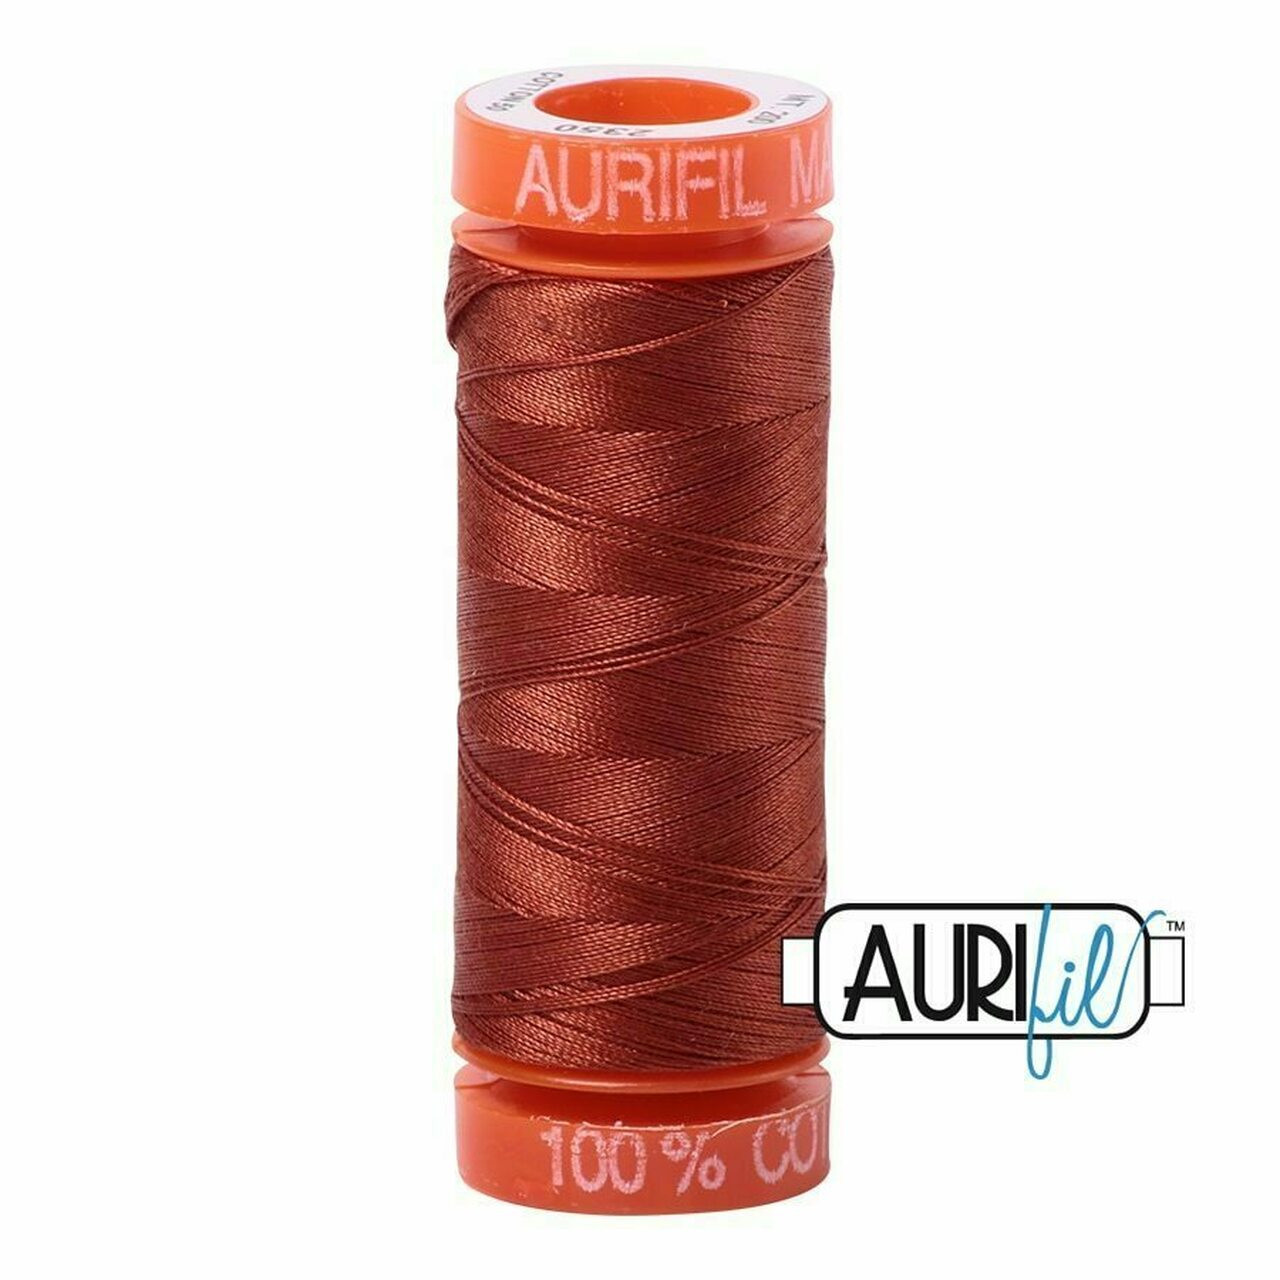 Aurifil 2350 - Copper